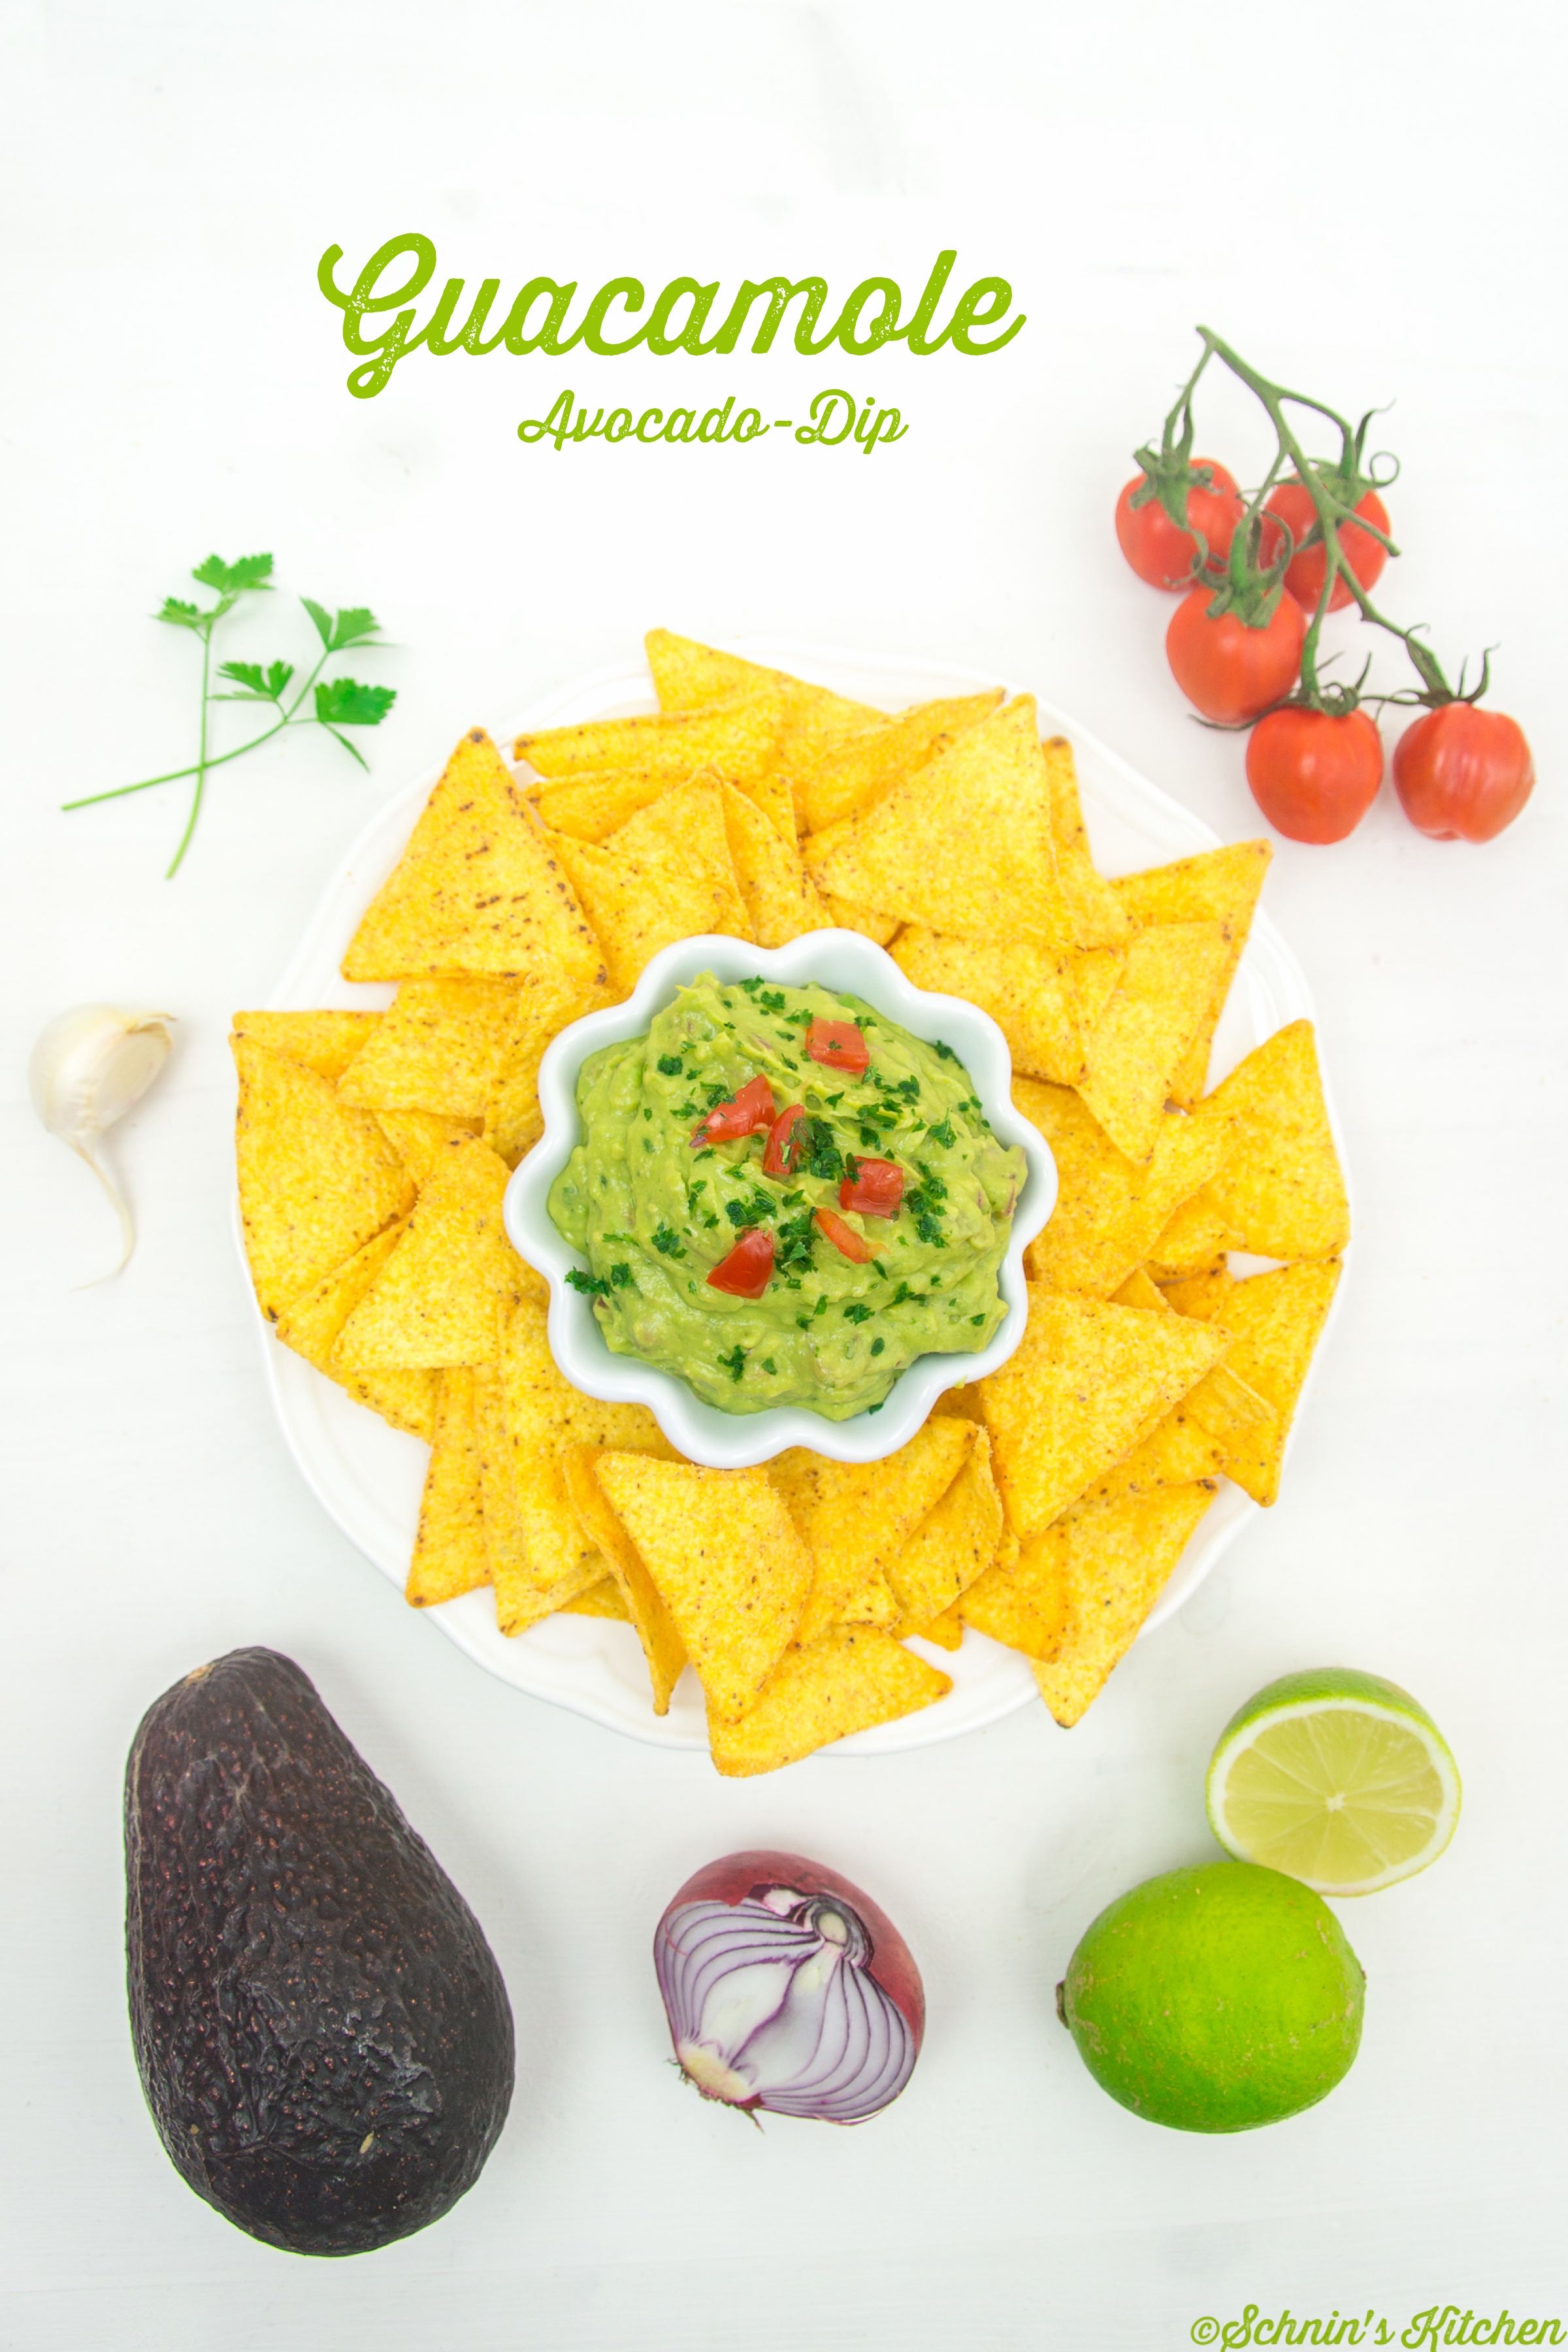 Schnin's Kitchen: Guacamole - mexikanischer Avocado-Dip